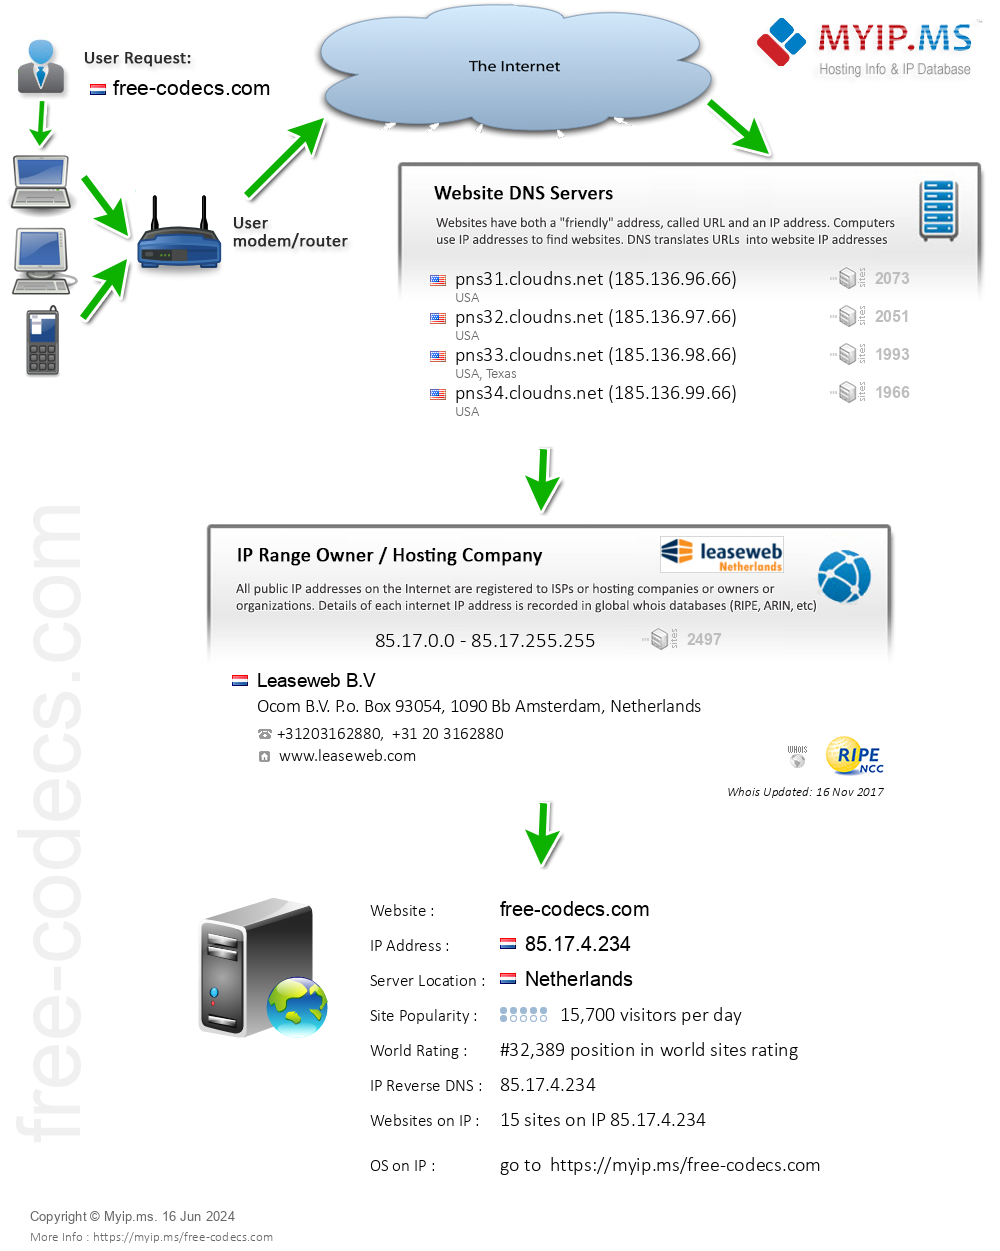 Free-codecs.com - Website Hosting Visual IP Diagram